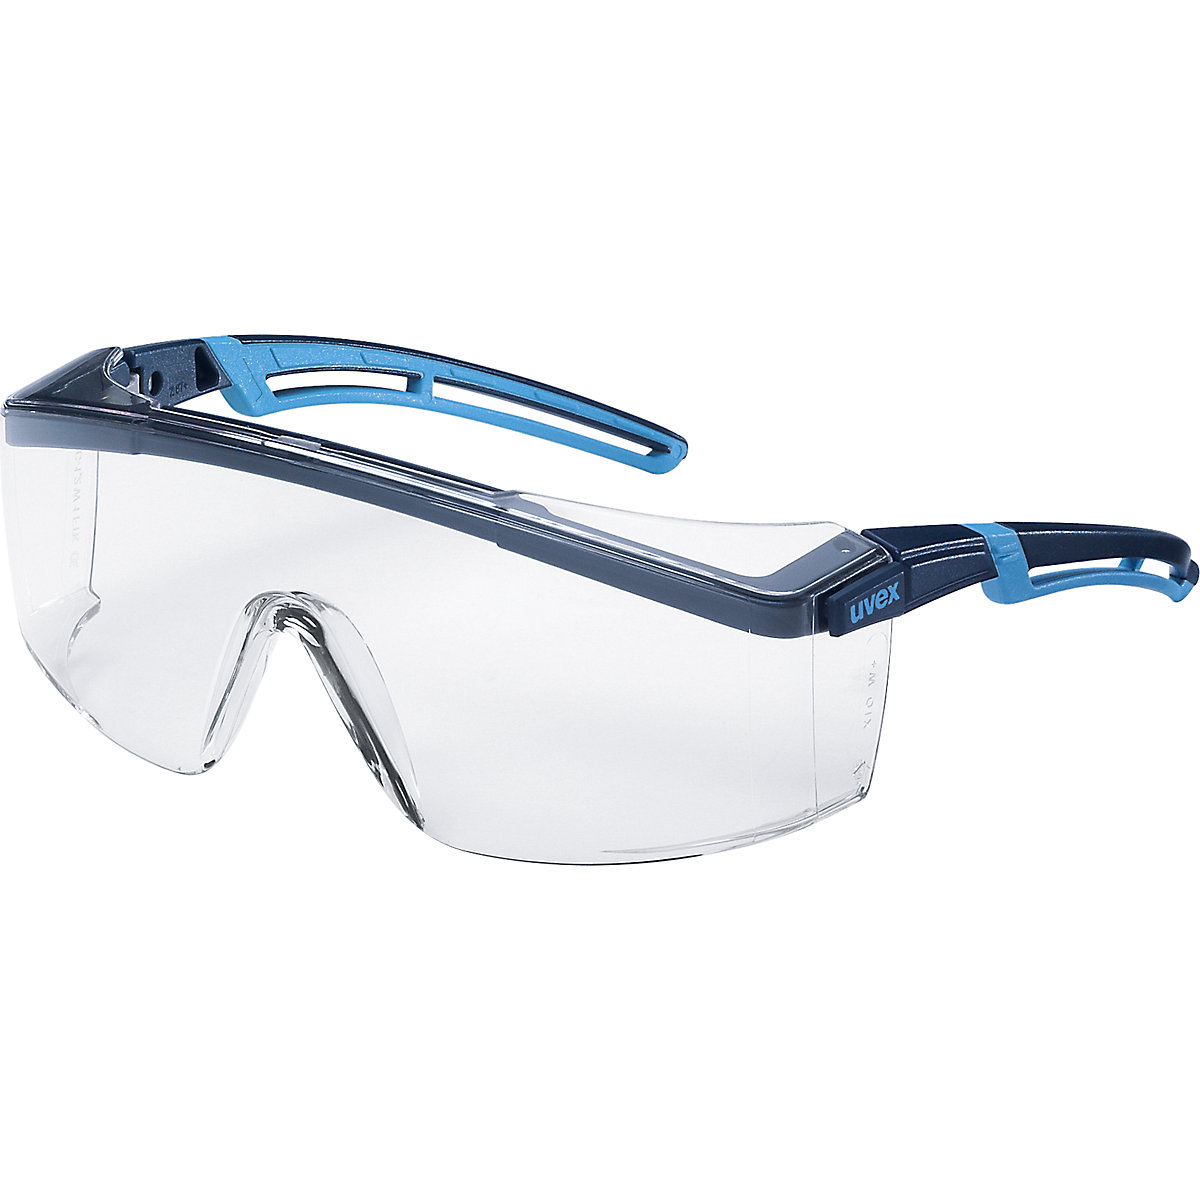 atrospec 2.0 safety spectacles - Uvex